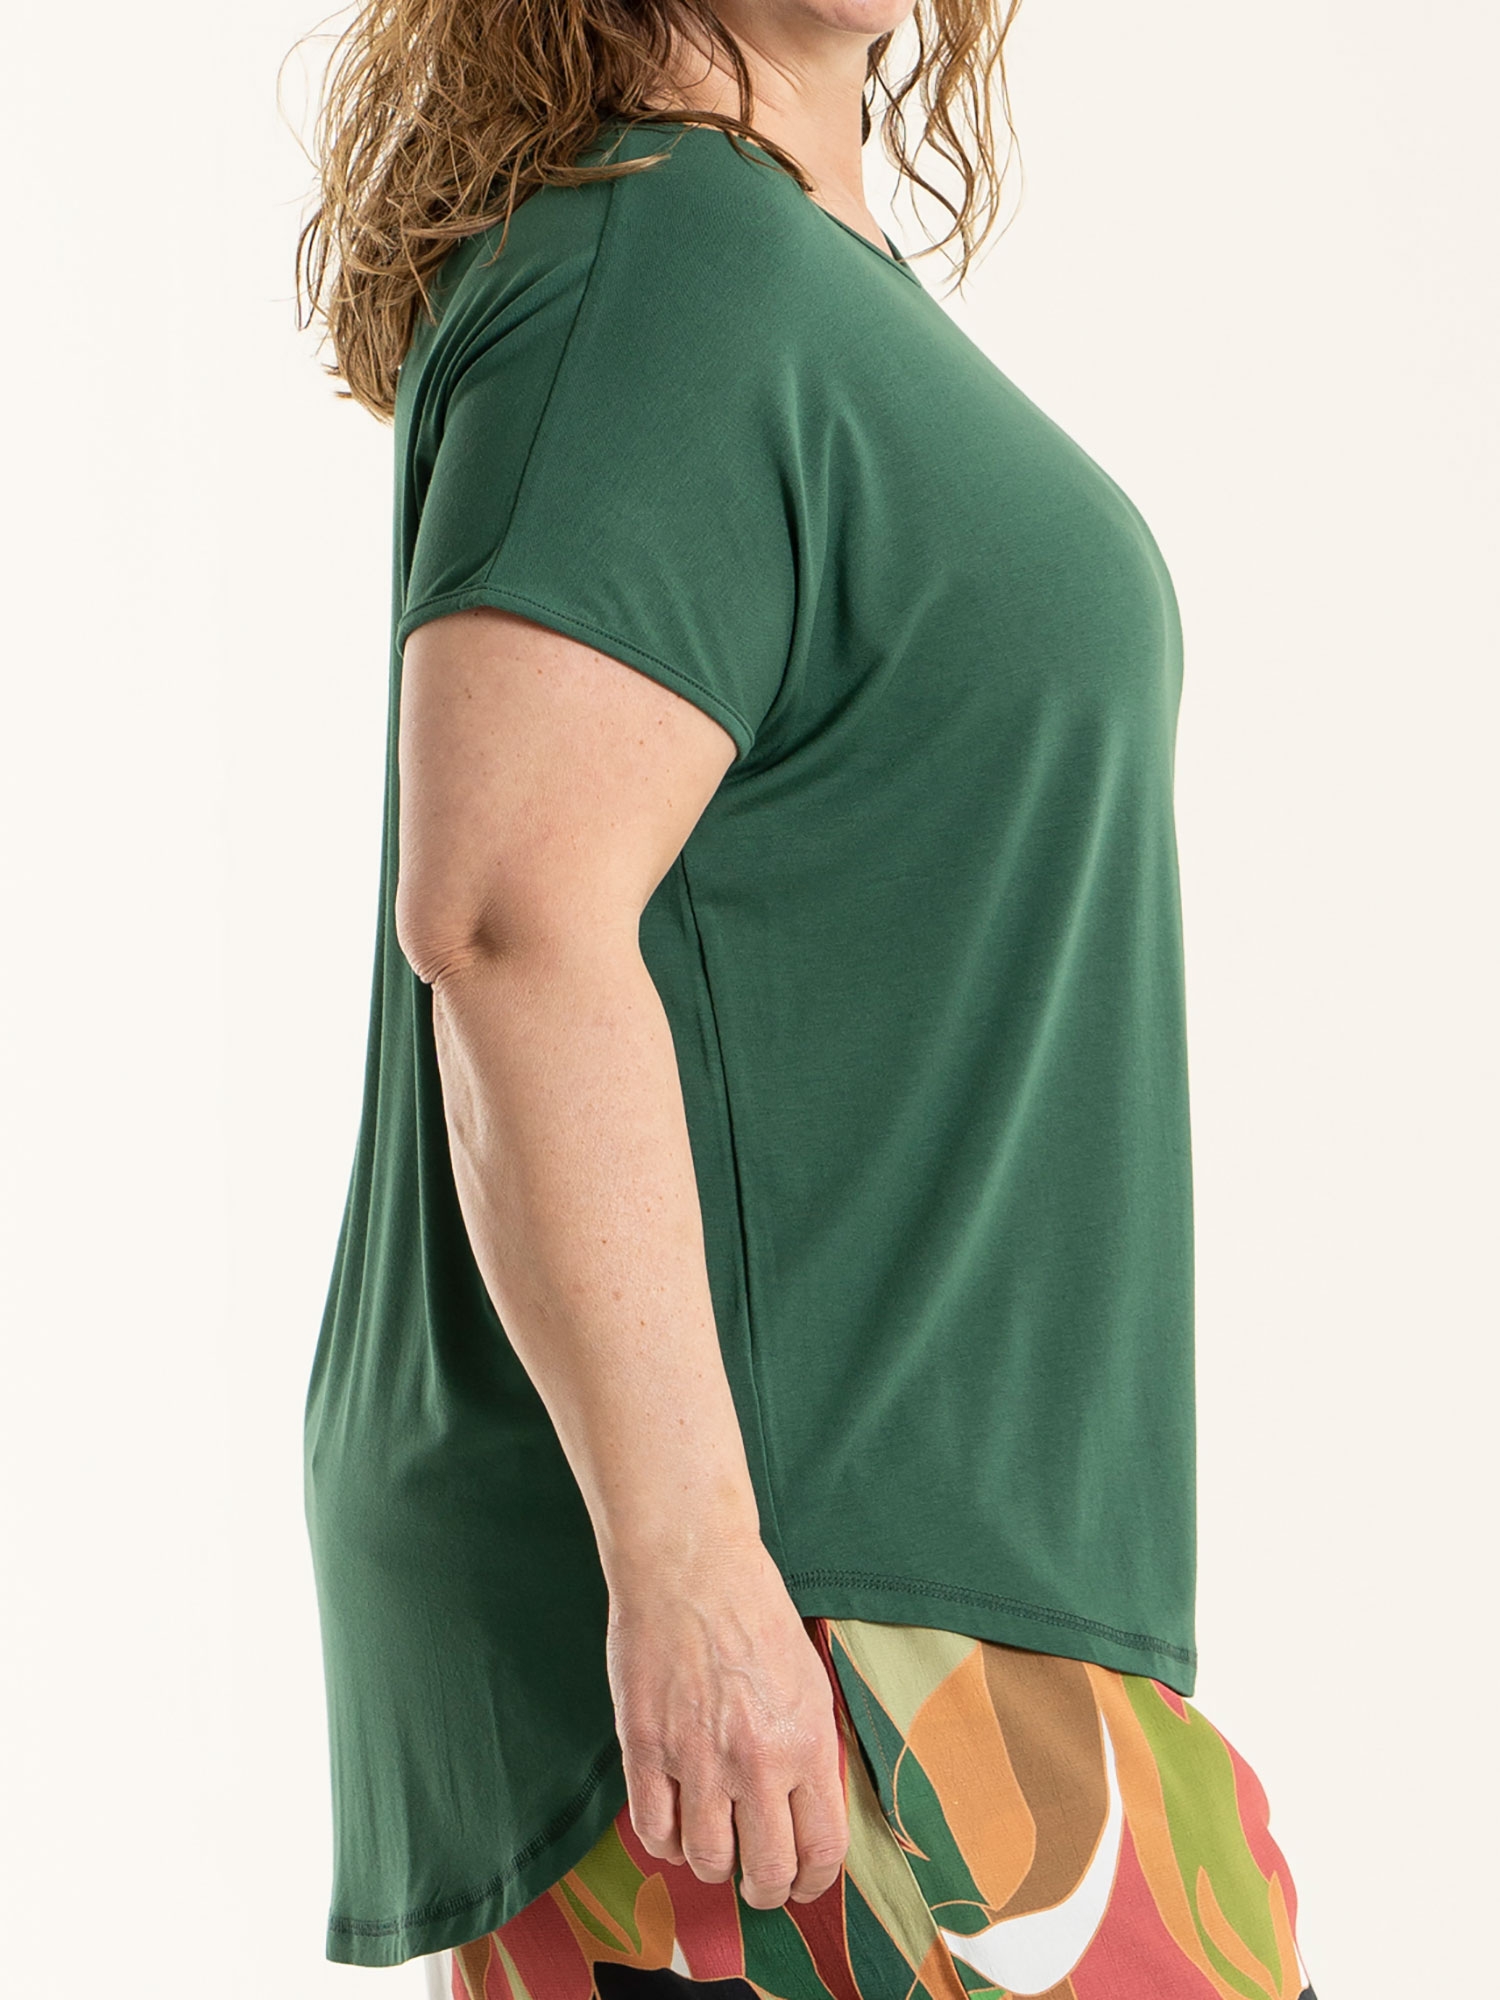 GITTE - Grøn bluse i viskose jersey med korte ærmer fra Gozzip